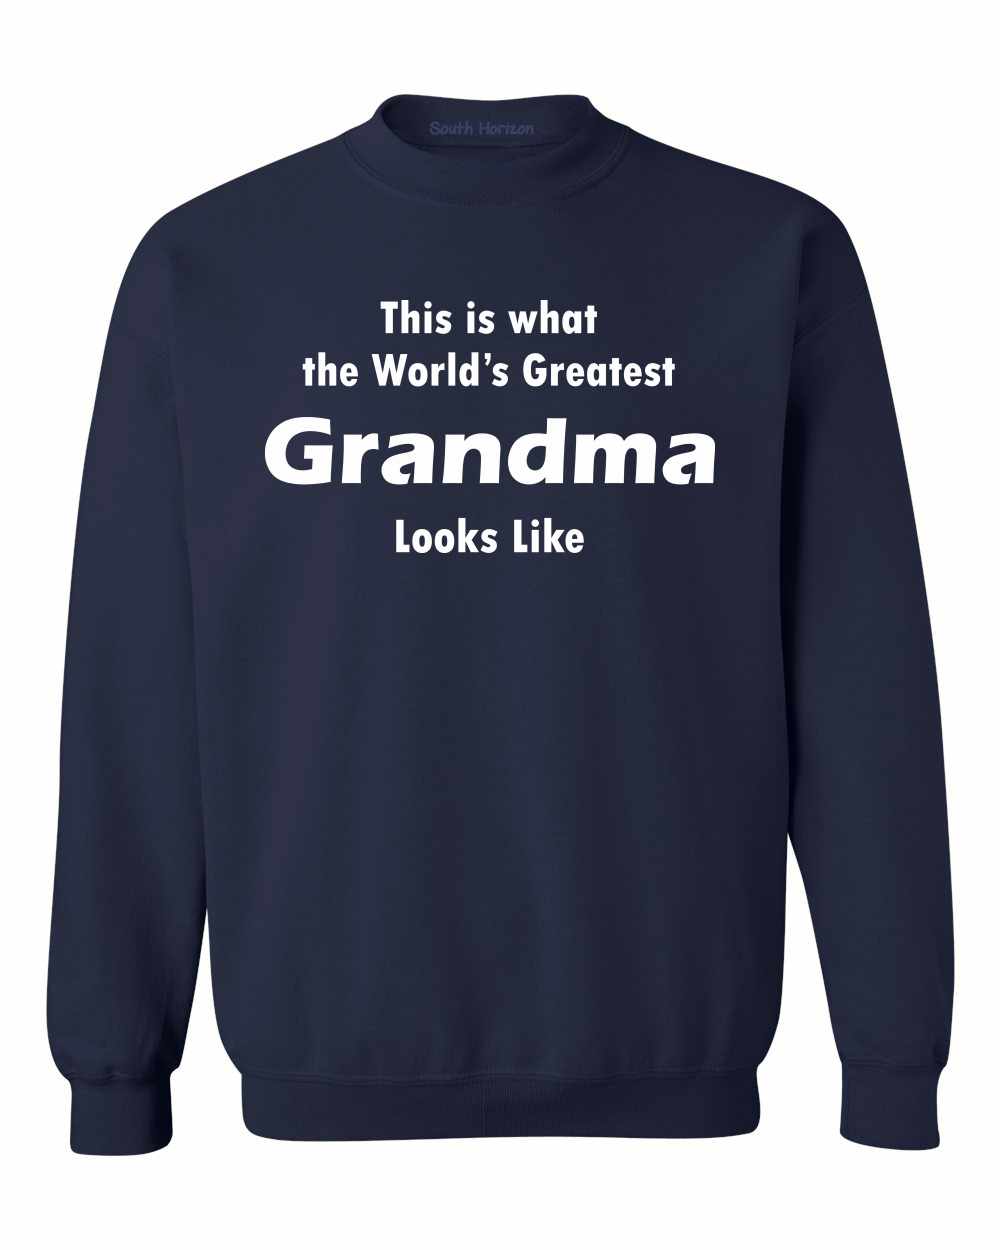 This is what the World's Greatest Grandma Looks Like on SweatShirt (#761-11)